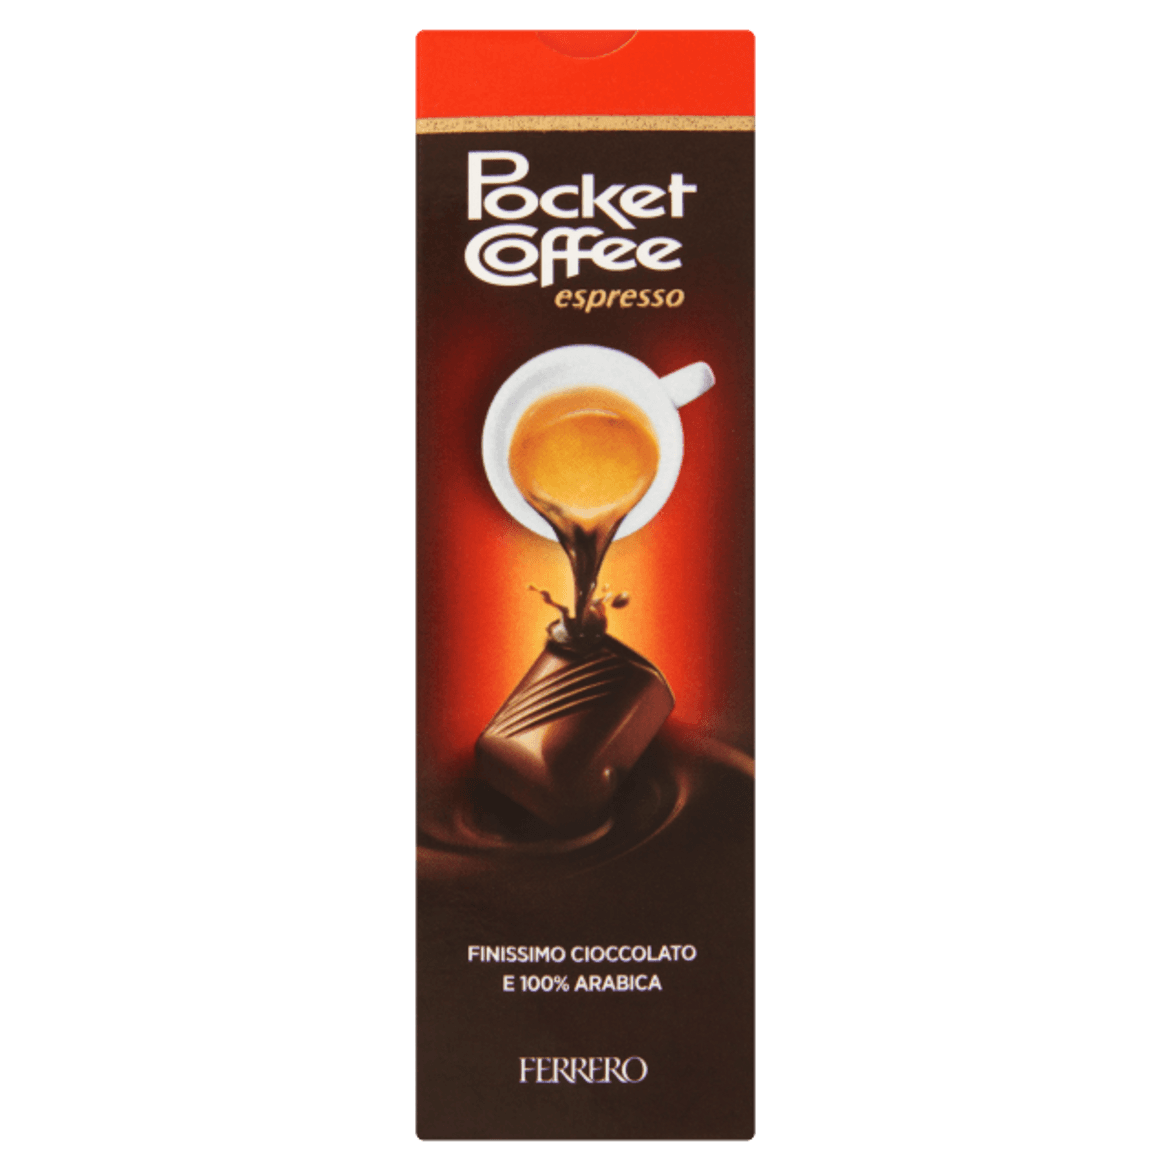 Pocket Coffee Espresso csokolÃ¡dÃ© Ã©s tejcsokolÃ¡dÃ© pralinÃ© folyÃ©kony kÃ¡vÃ©val tÃ¶ltve 5 db 62,5 g